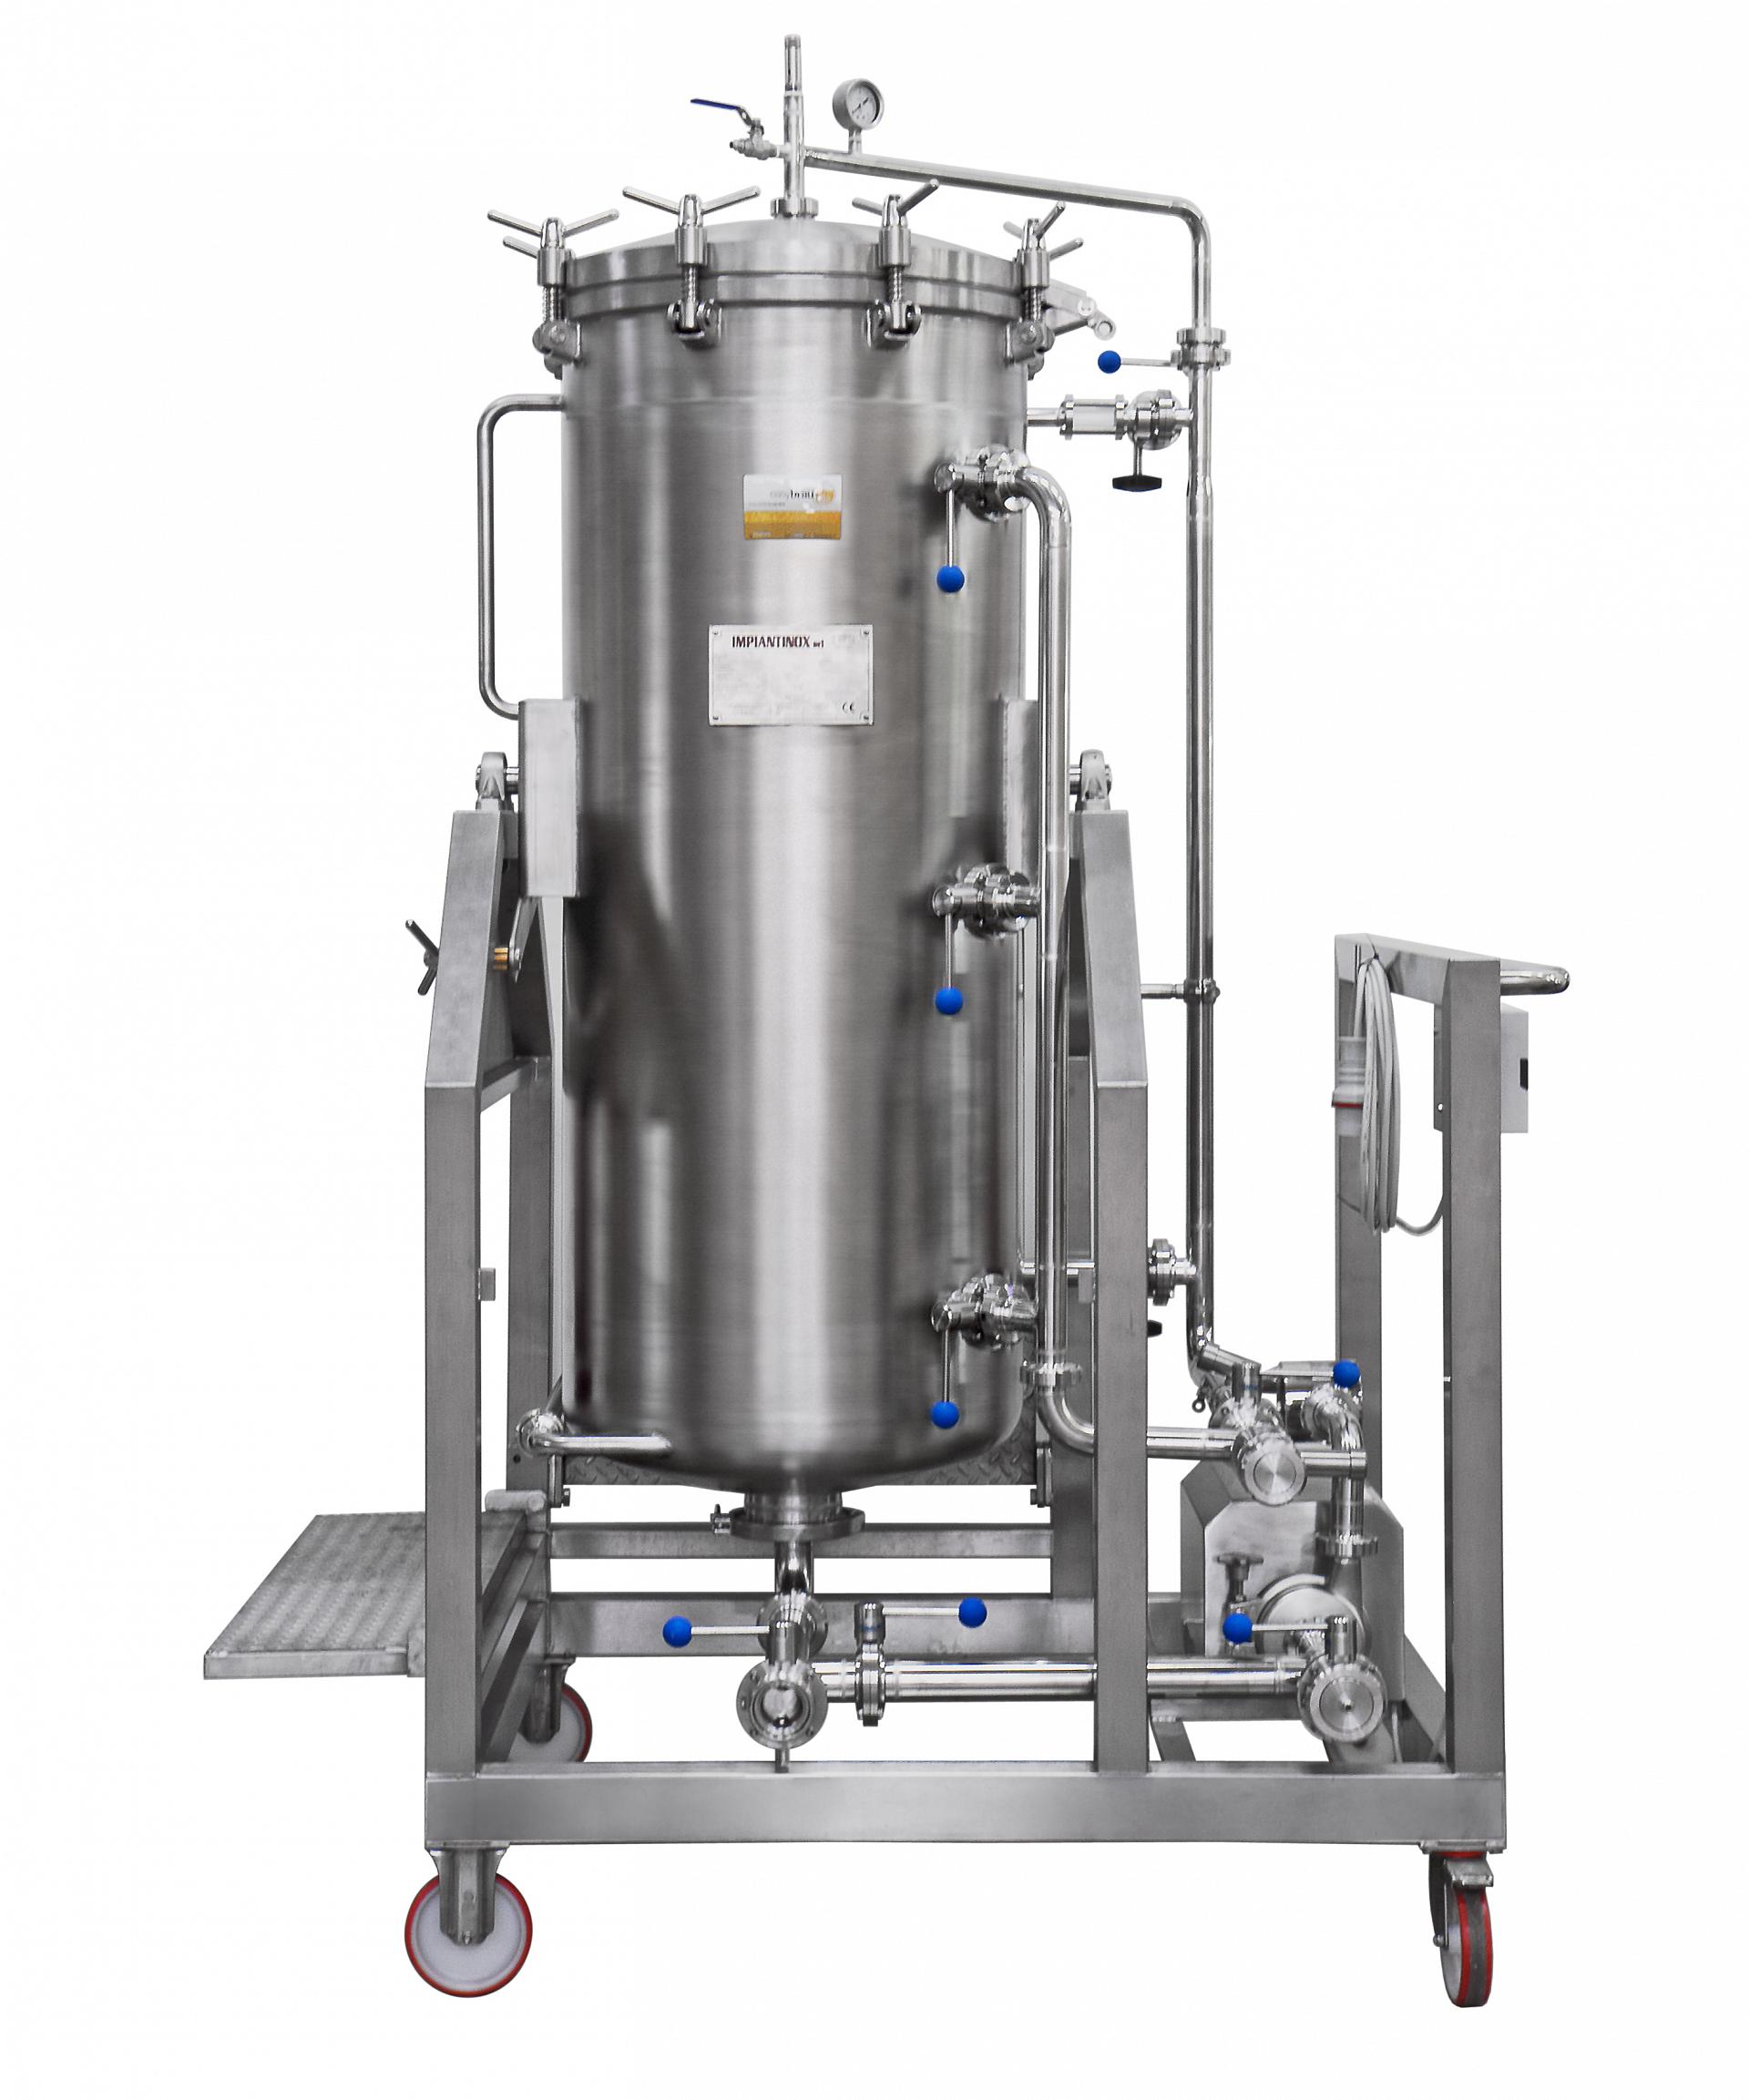 DRY HOPPING - Easybräu-Velo: Beer Brewing System | easybrau-velo.com